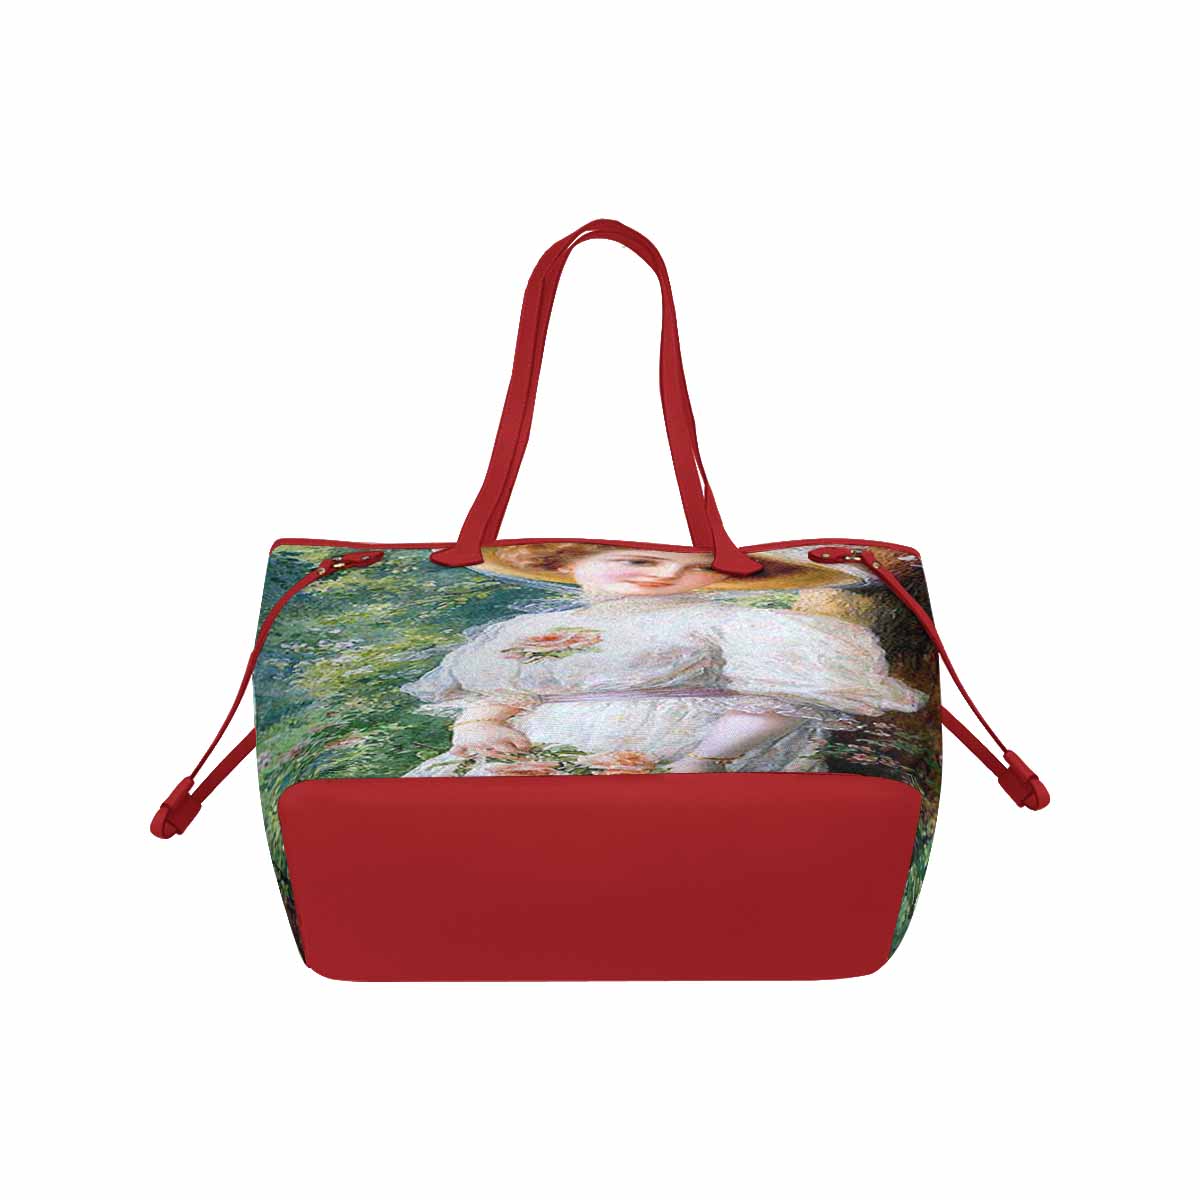 Victorian Lady Design Handbag, Model 1695361, Reverie, RED TRIM